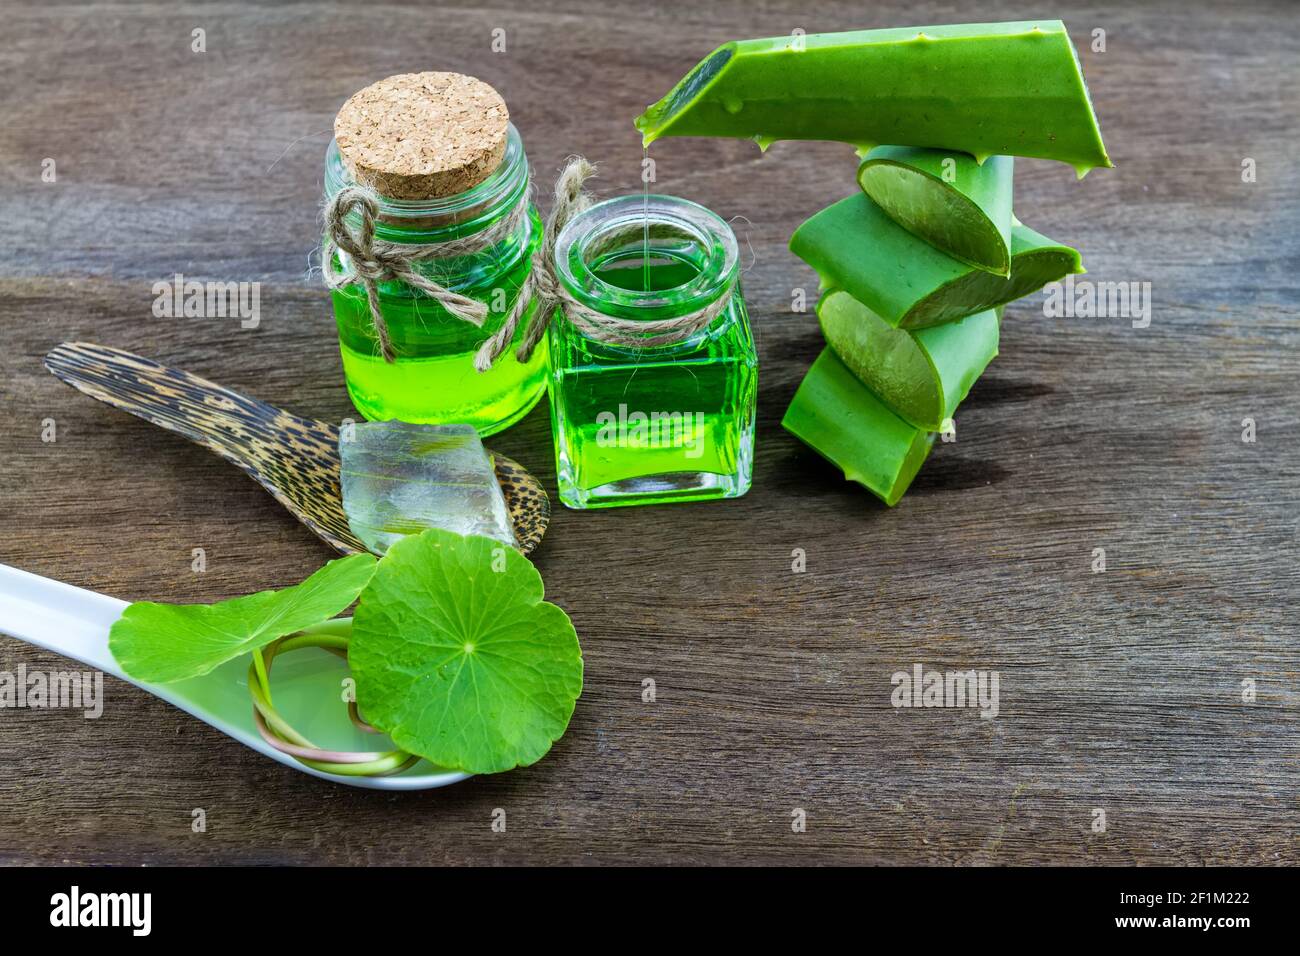 Slice Aloe Vera (Aloe barbadensis Mill.,Star cactus,  Aloin, Jafferabad or Barbados)   Aloe vera essential oil with Green Asiatic Pennywort  in spoon Stock Photo